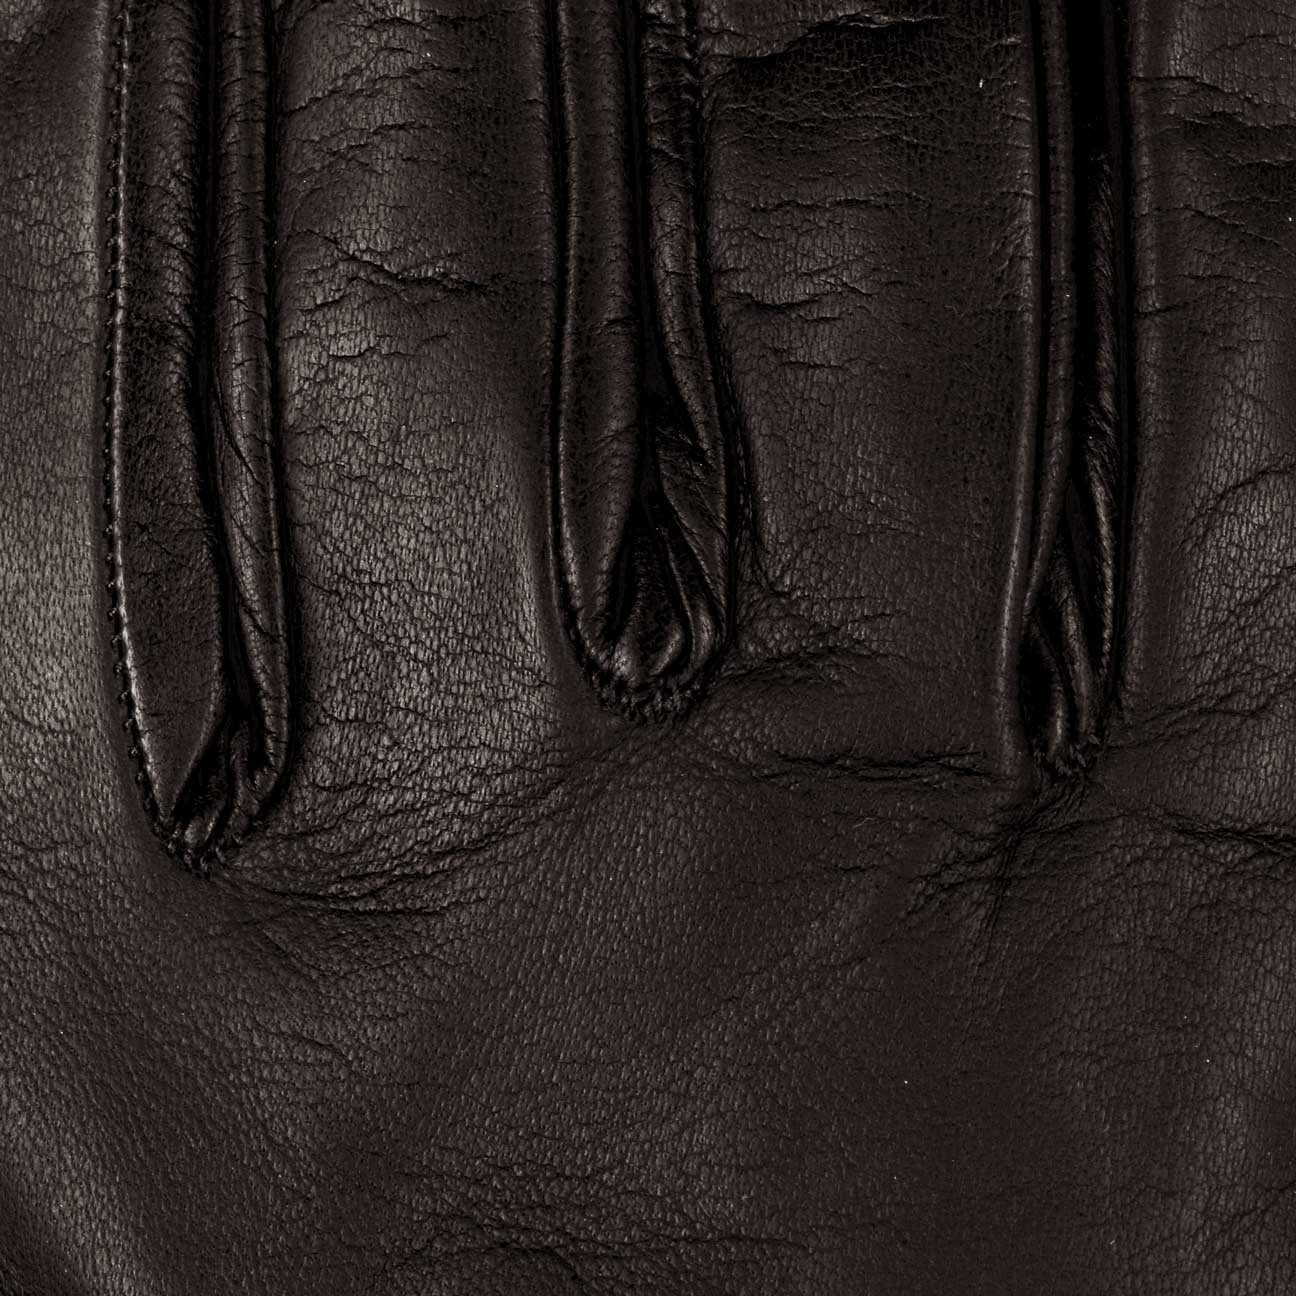 Futter, Fingerhandschuhe in schwarz Made Italy mit Lederhandschuhe Caridei